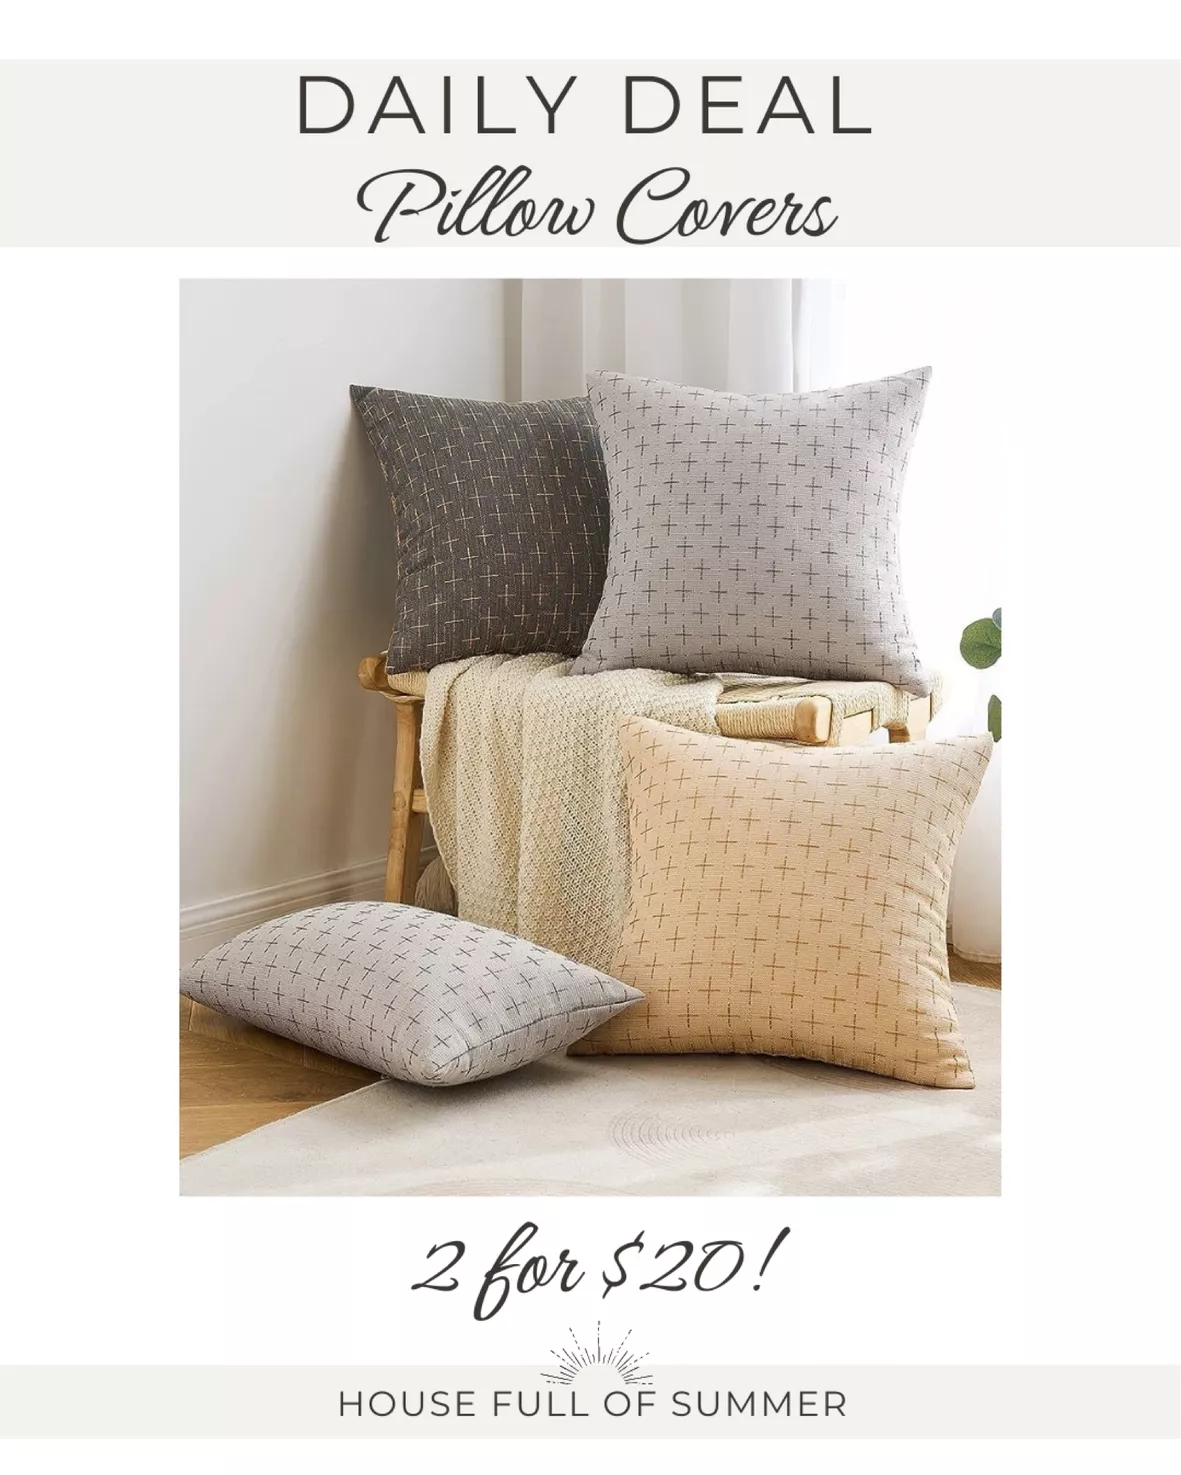 MIULEE Beige Decorative Throw Pillow Covers, Soft Faux Fur Pillow Case